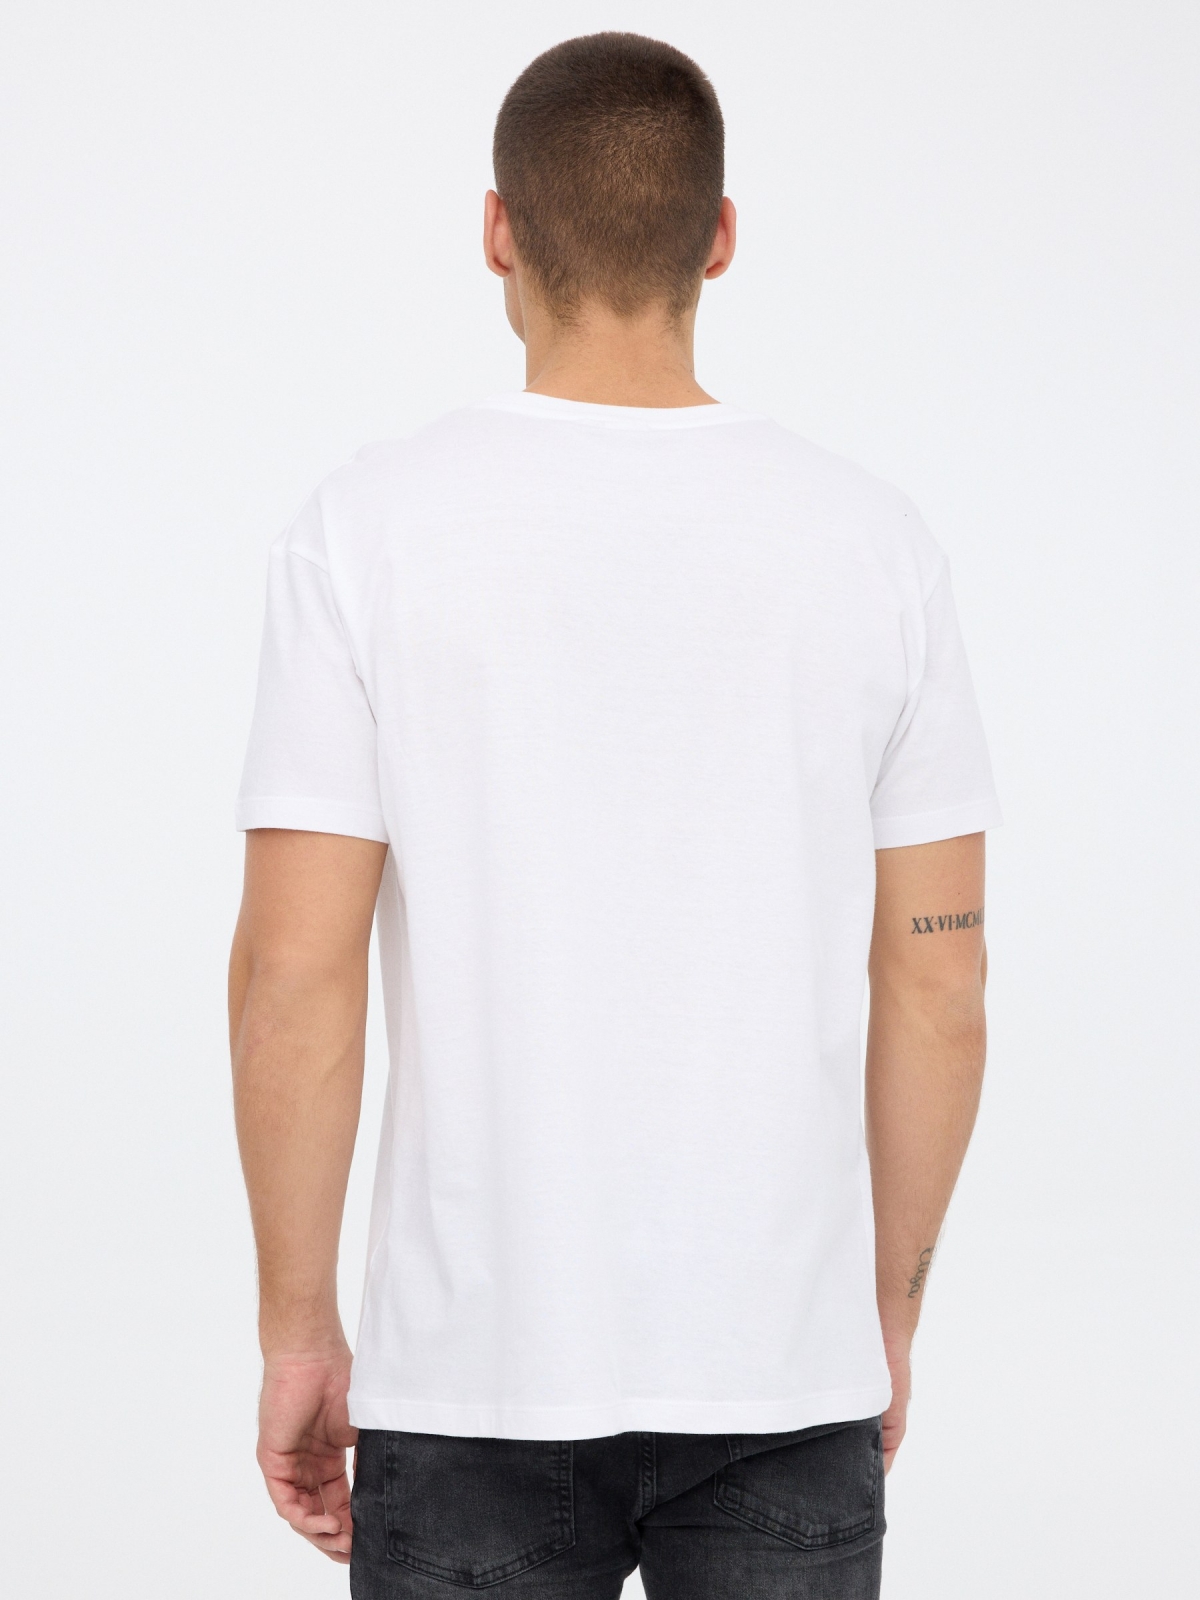 Camiseta Mandalorian blanco vista media trasera